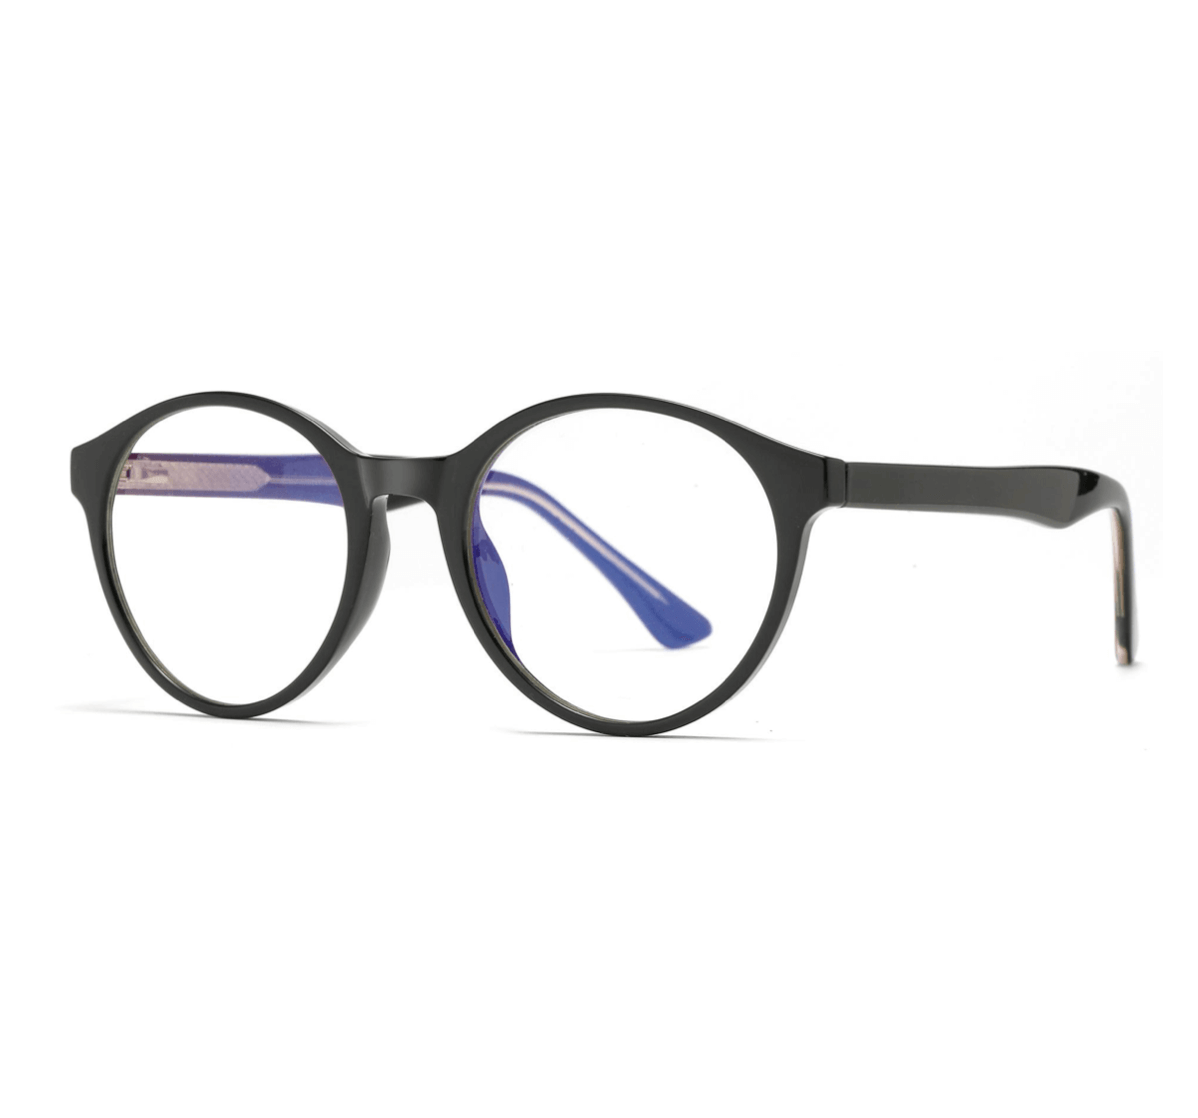 round TR90+CP blue light glasses manufacturer, blue light glasses supplier, blue light glasses china, wholesale blue light glasses, wholesale computer glasses